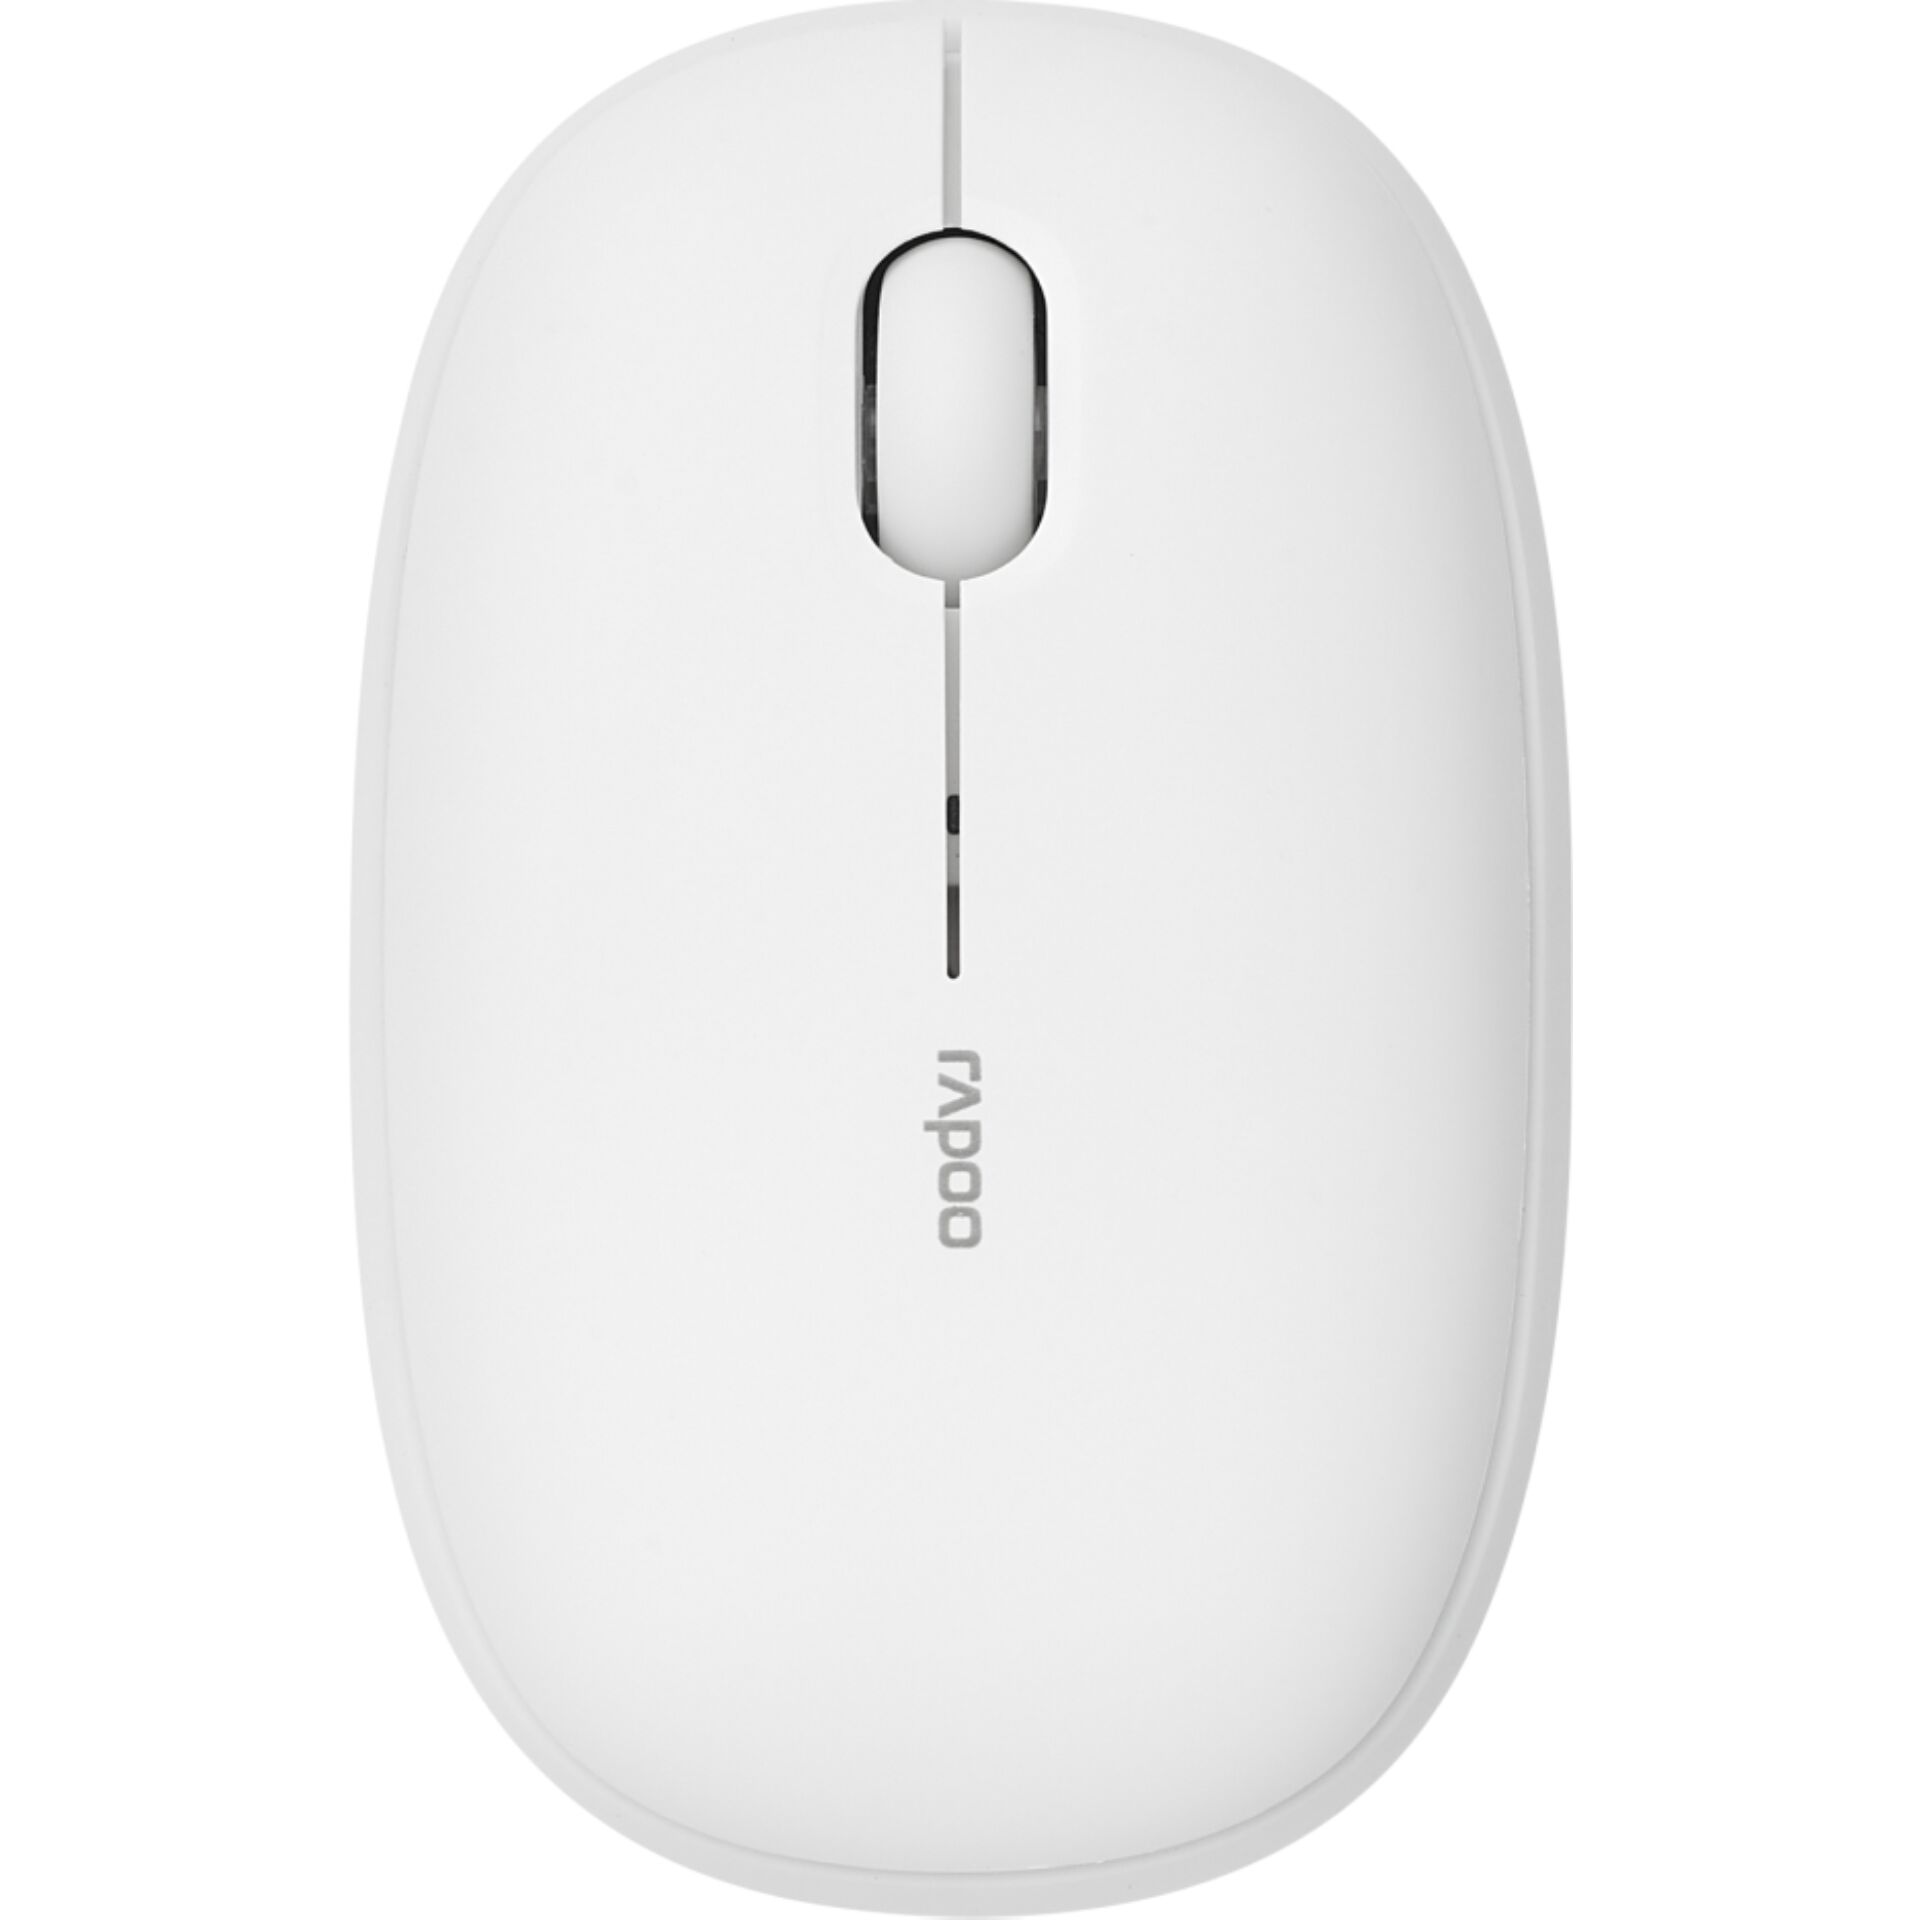 Rapoo M660 Silent white Wireless Multi-Mode Mouse